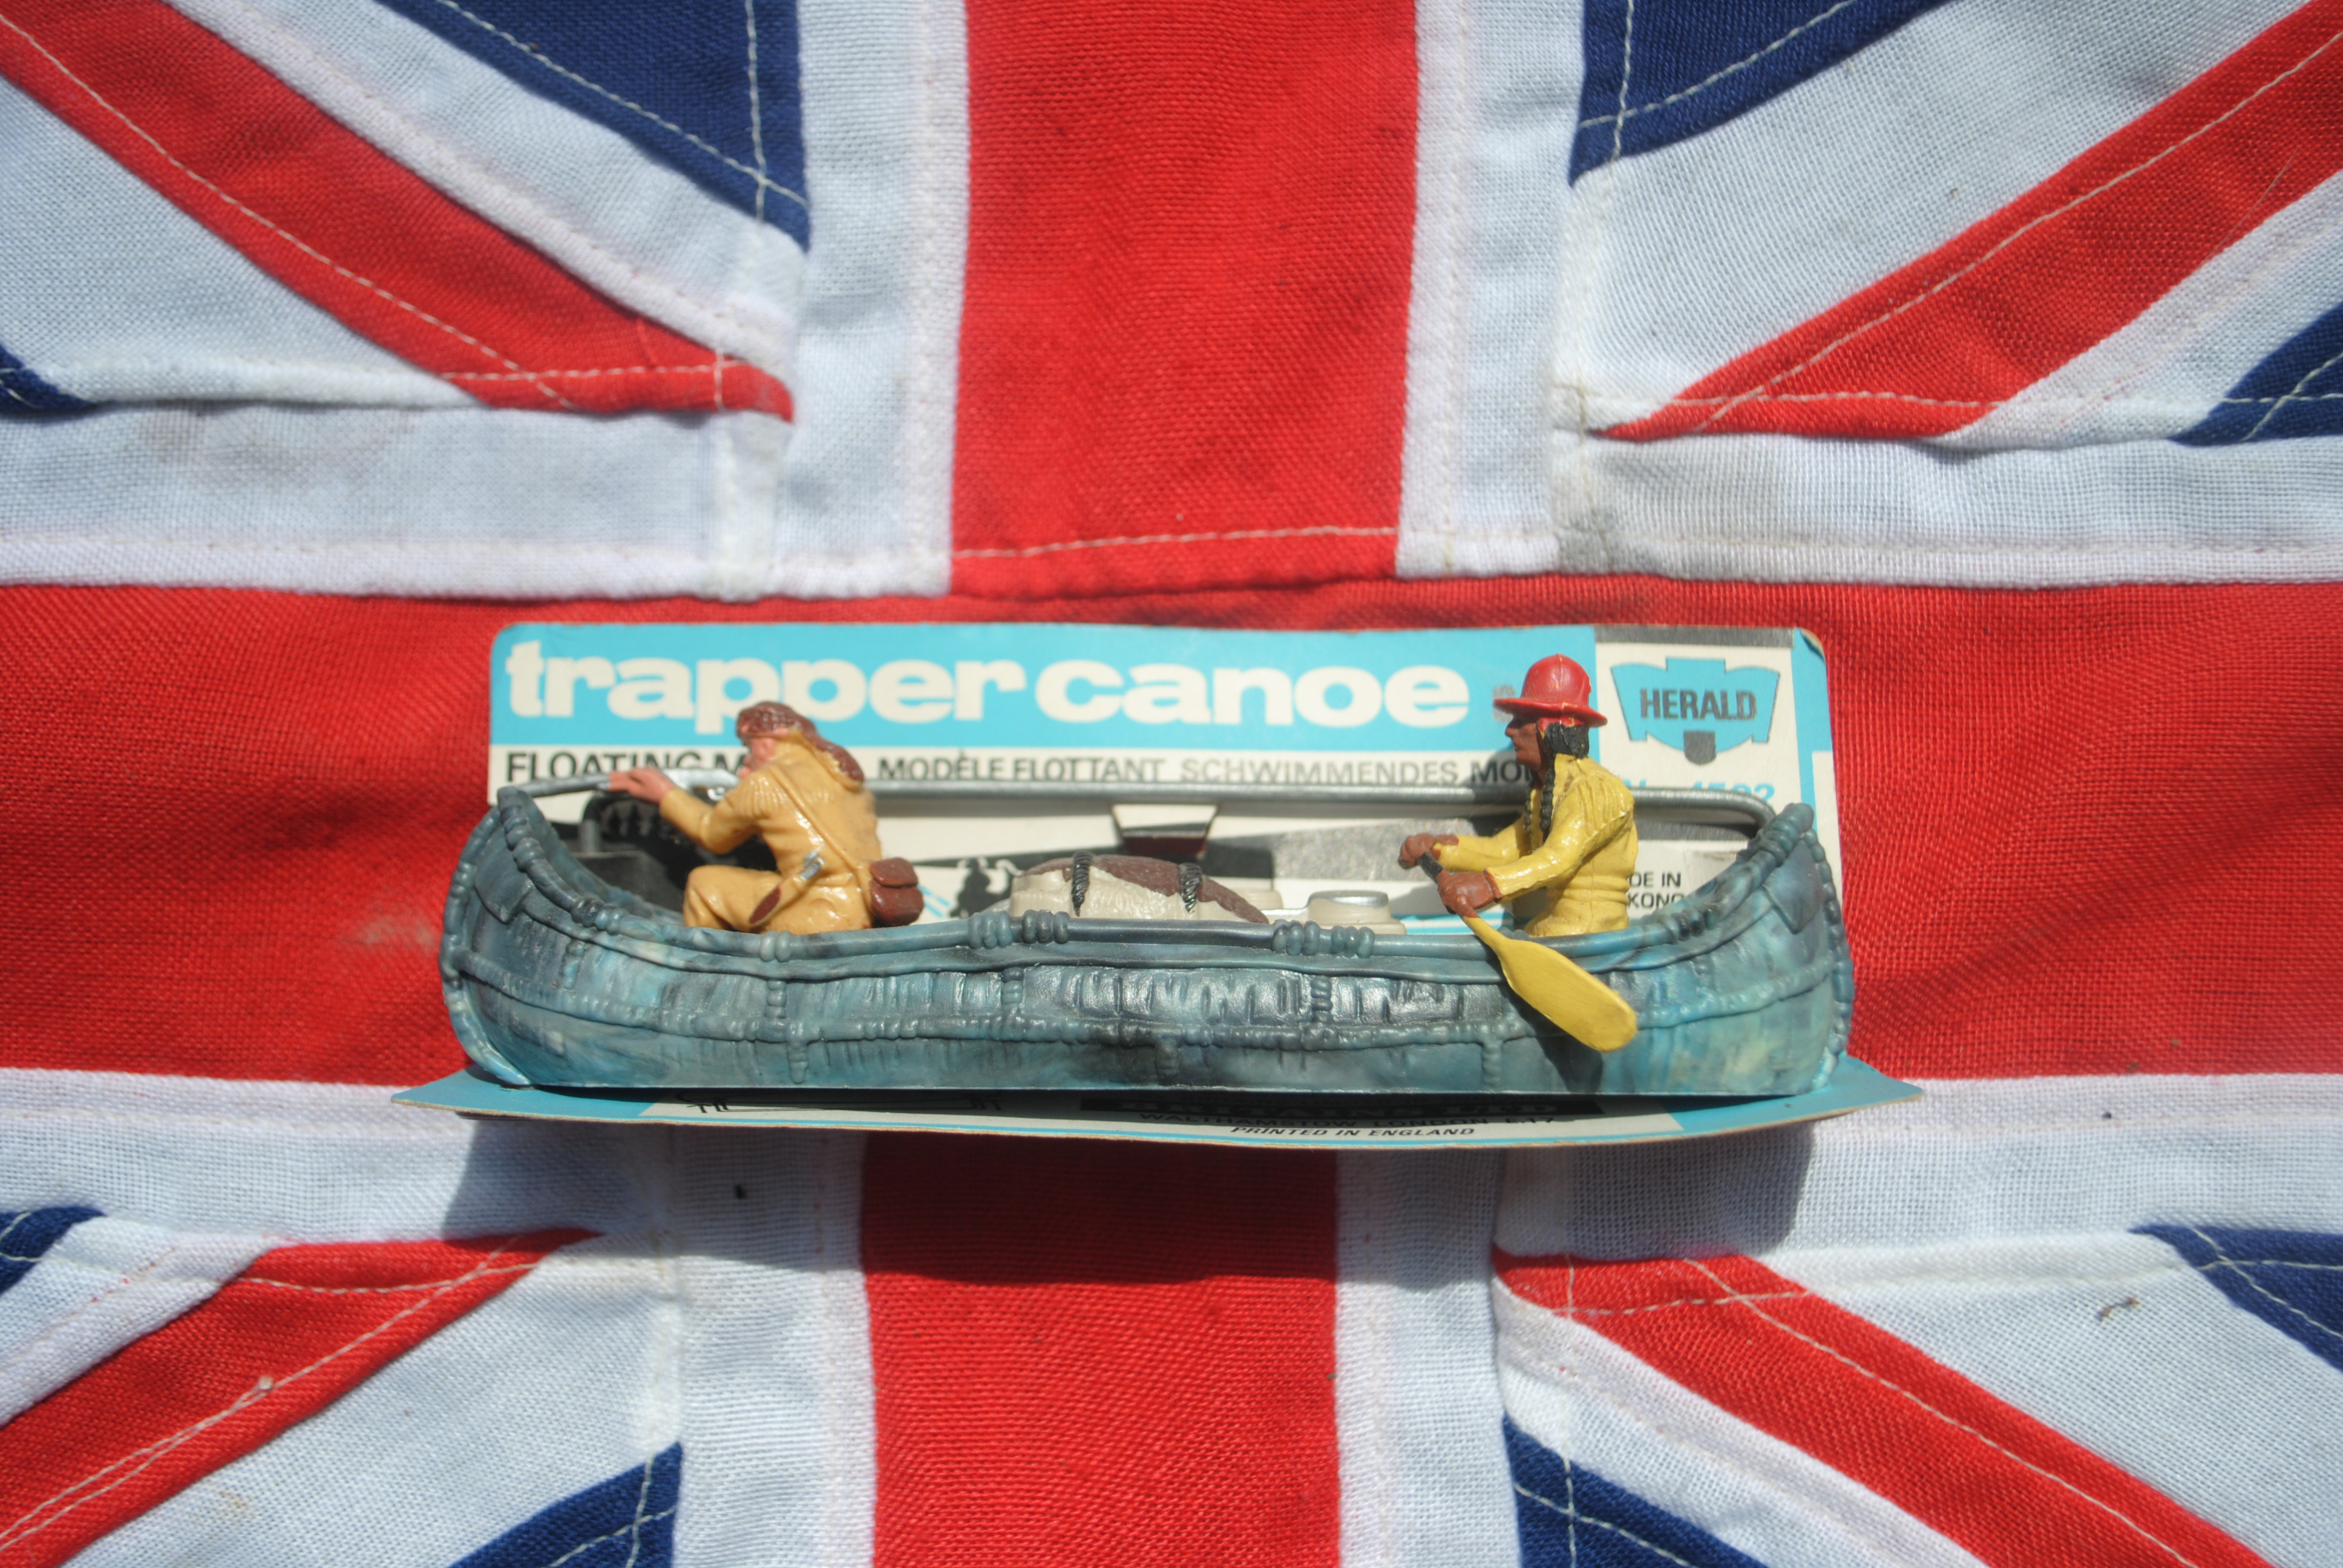 Britains LTD Models / HERALD FLOATING MODELS 4502 TRAPPER CANOE with 2 Figures 